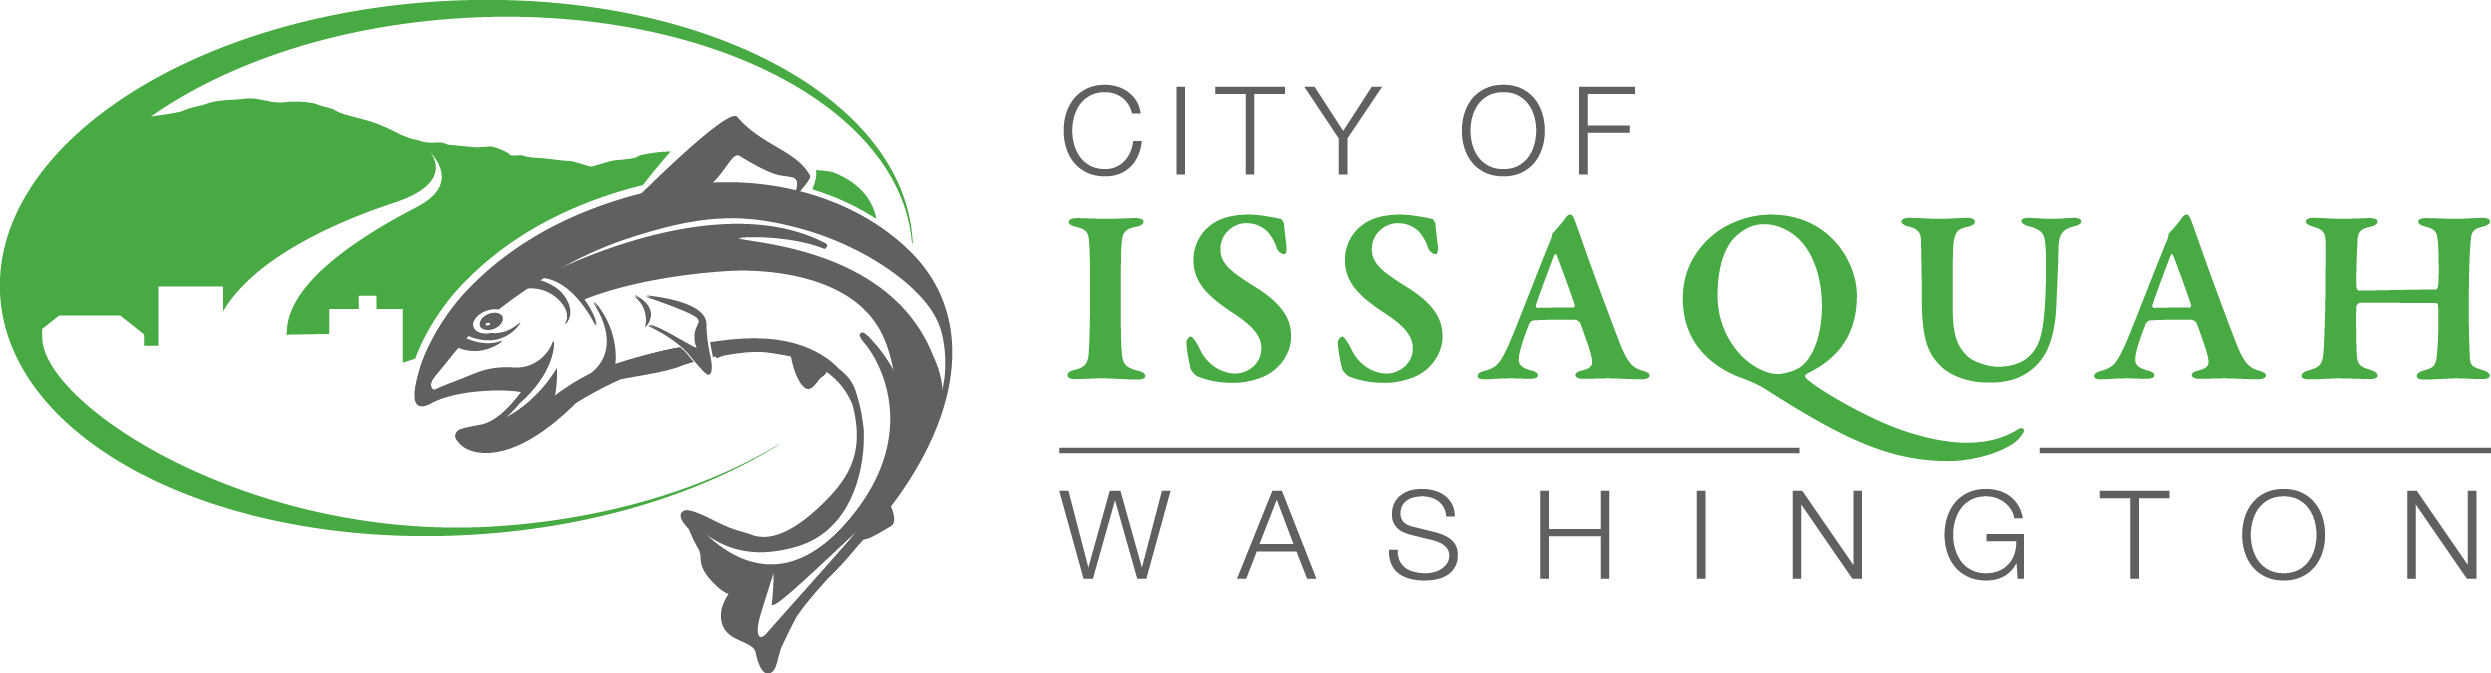 Issaquah Logo - Issaquah Logo